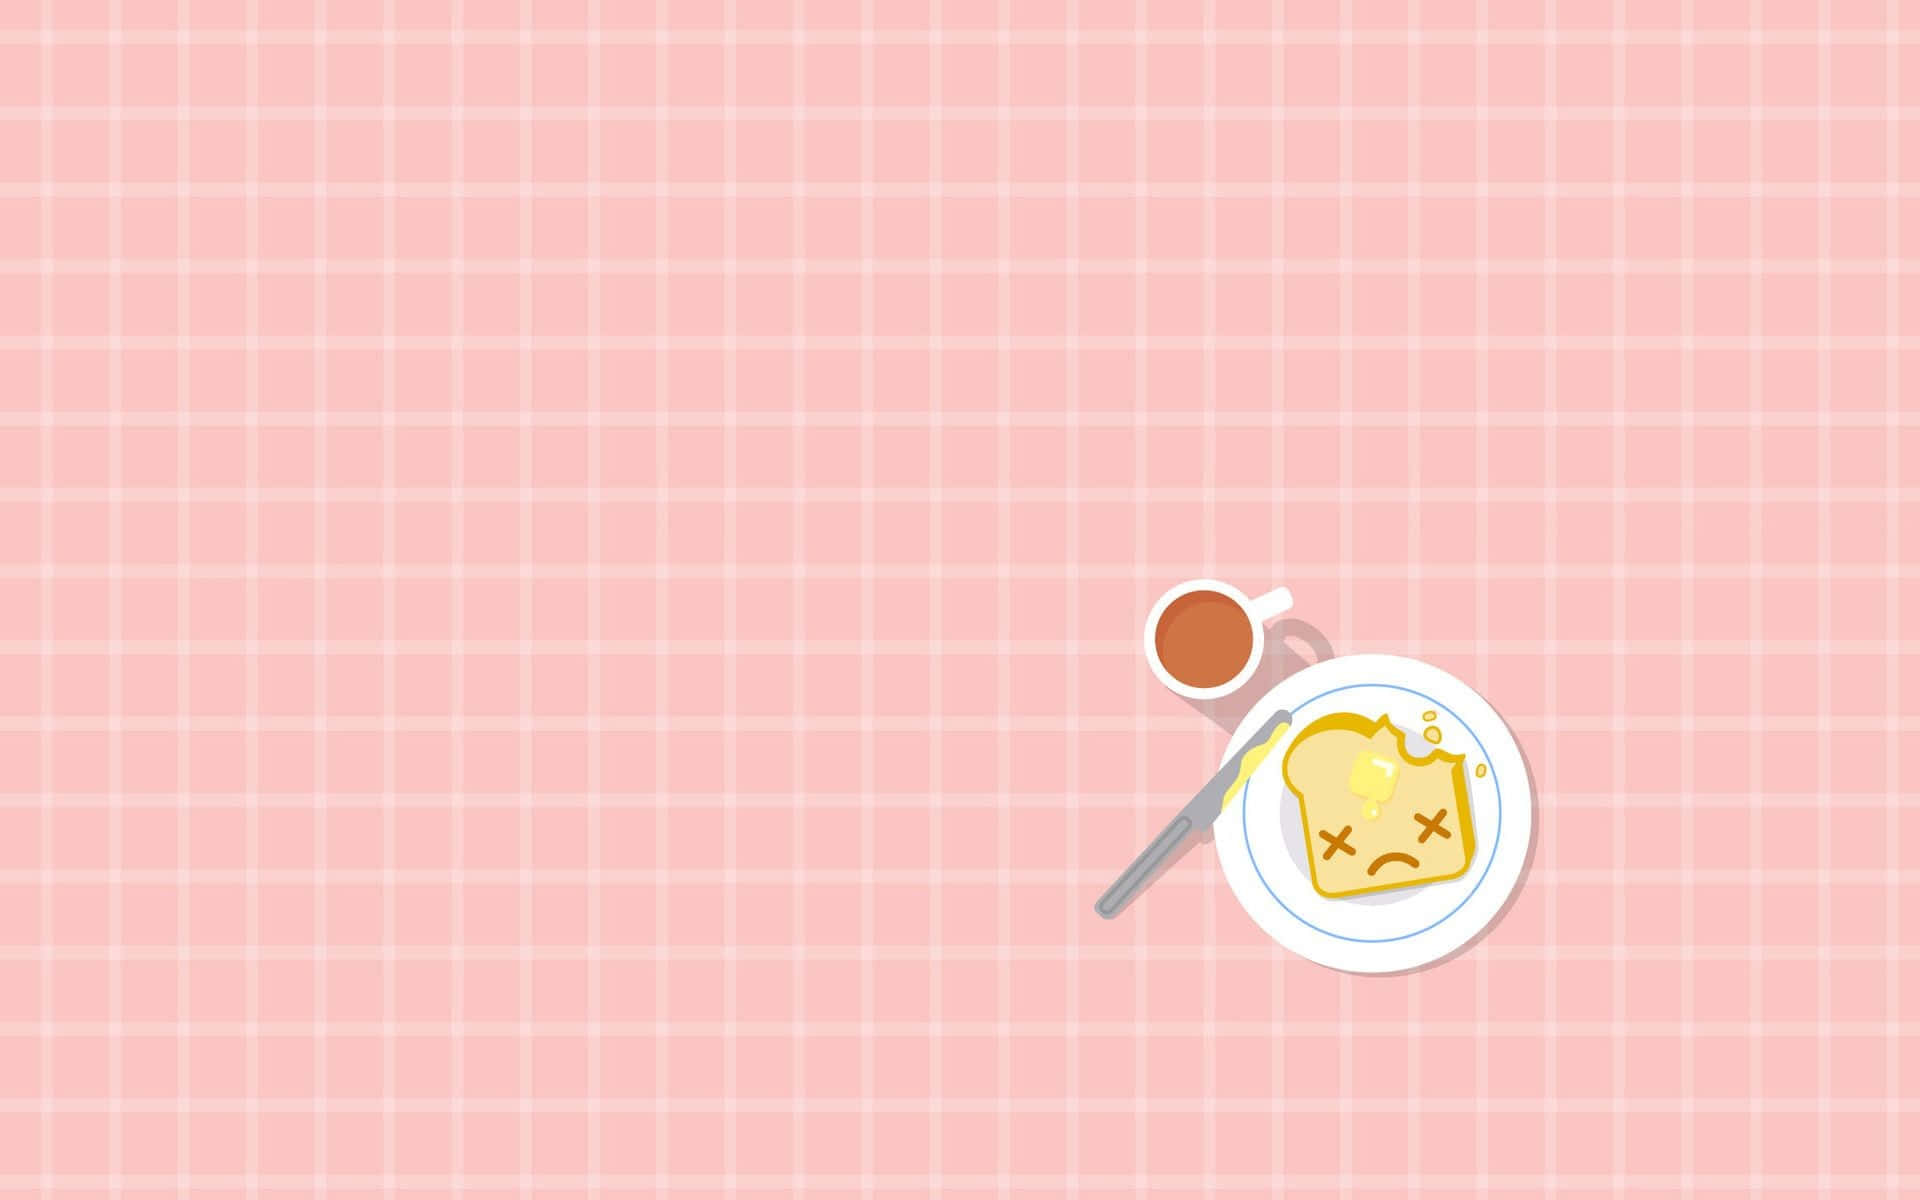 "Cute Bento Box featuring Kawaii Japanese Food Characters" Wallpaper